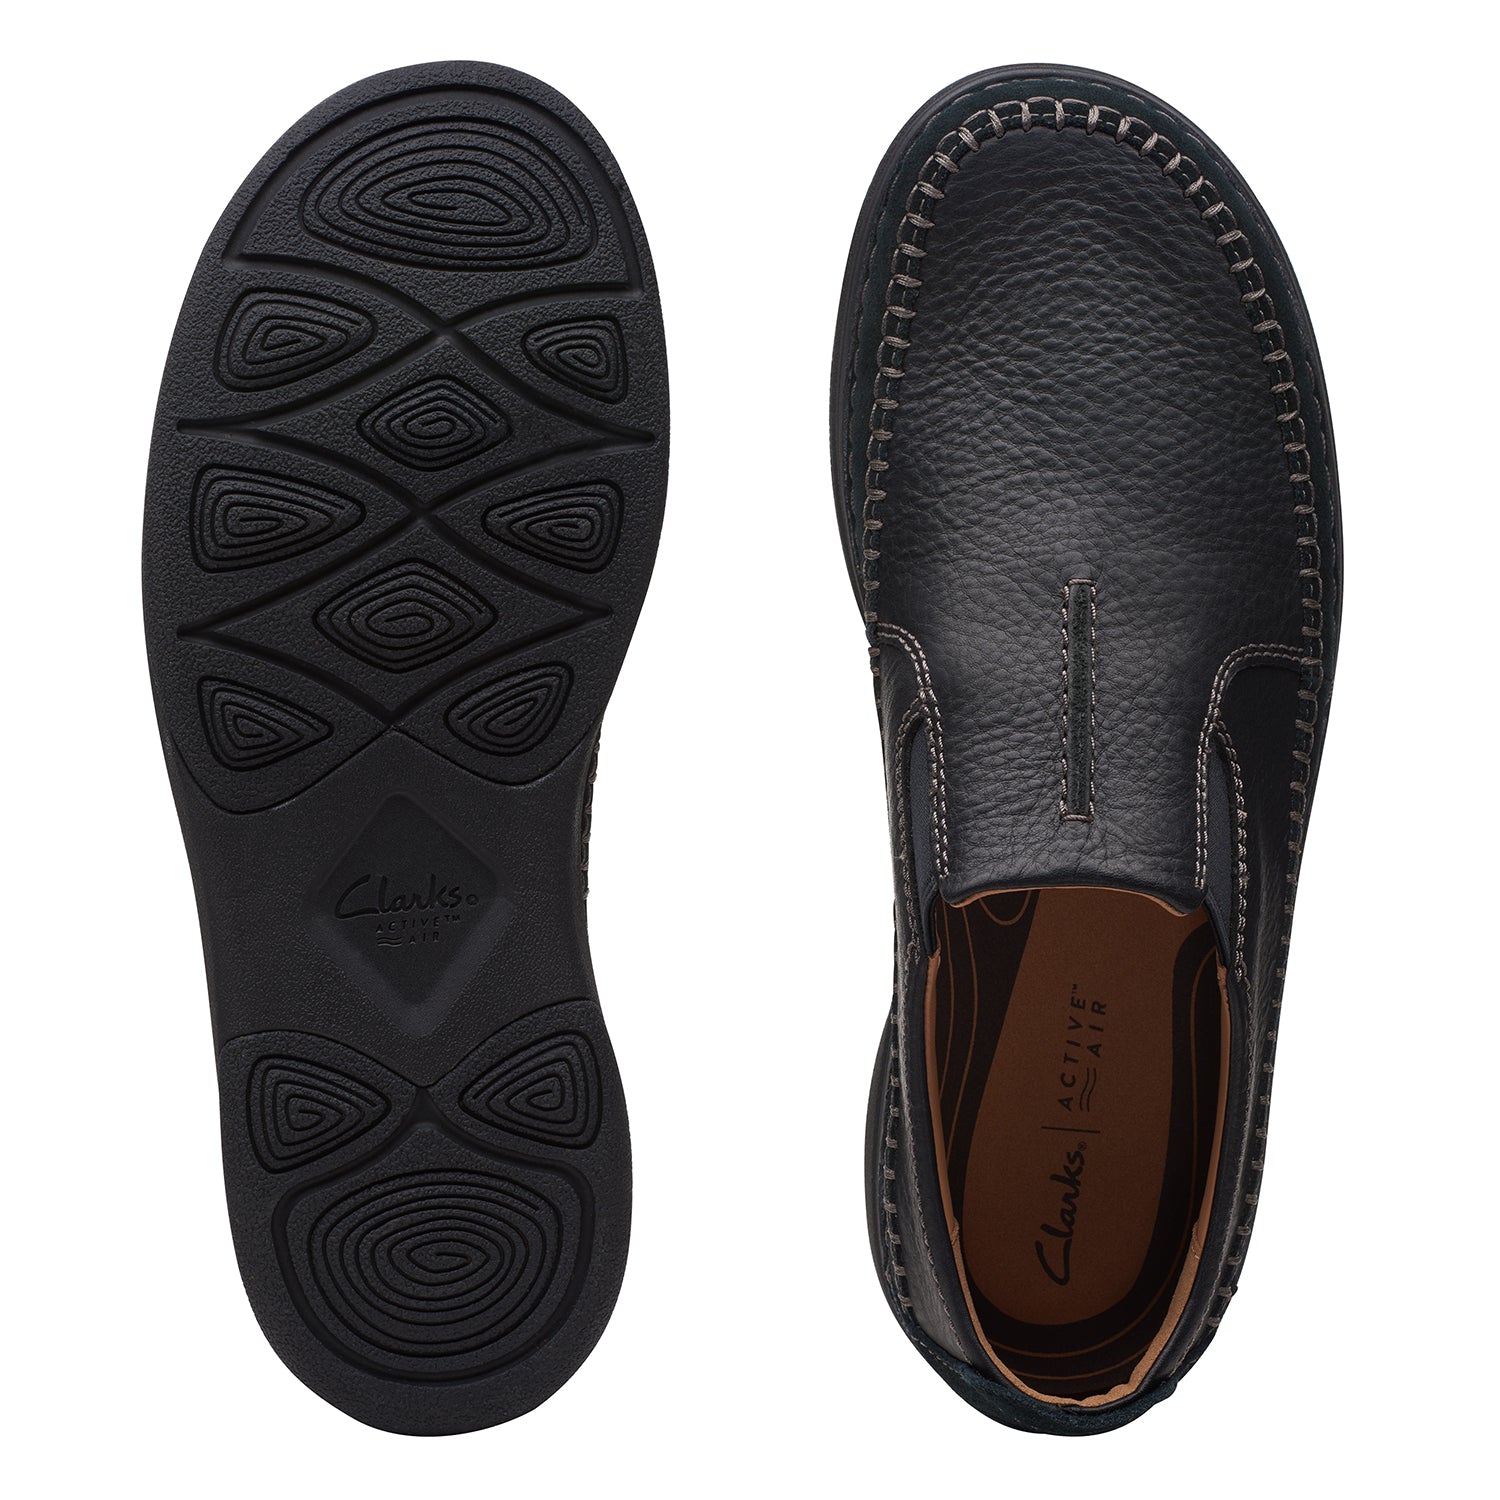 Clarks Nature 5 Walk Shoes - Black Combi - 261684288 - H Width (Wide Fit)